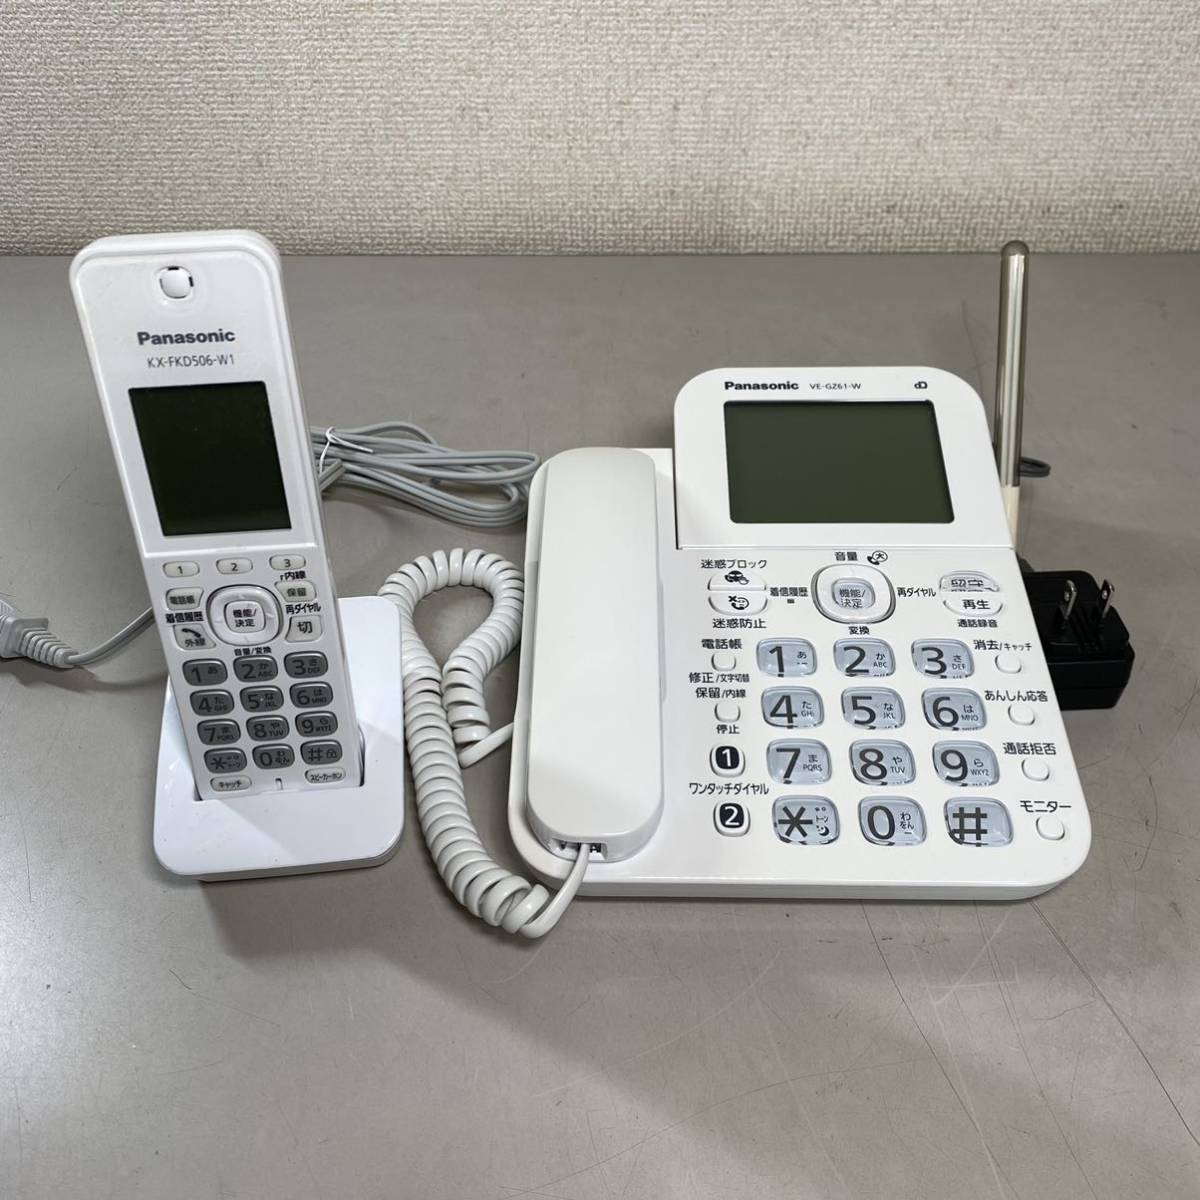 a*★中古品　Panasonic パナソニック デジタルコードレス電話機 VE-GZ61-W KX-FKD506-W1 子機 ★_画像1